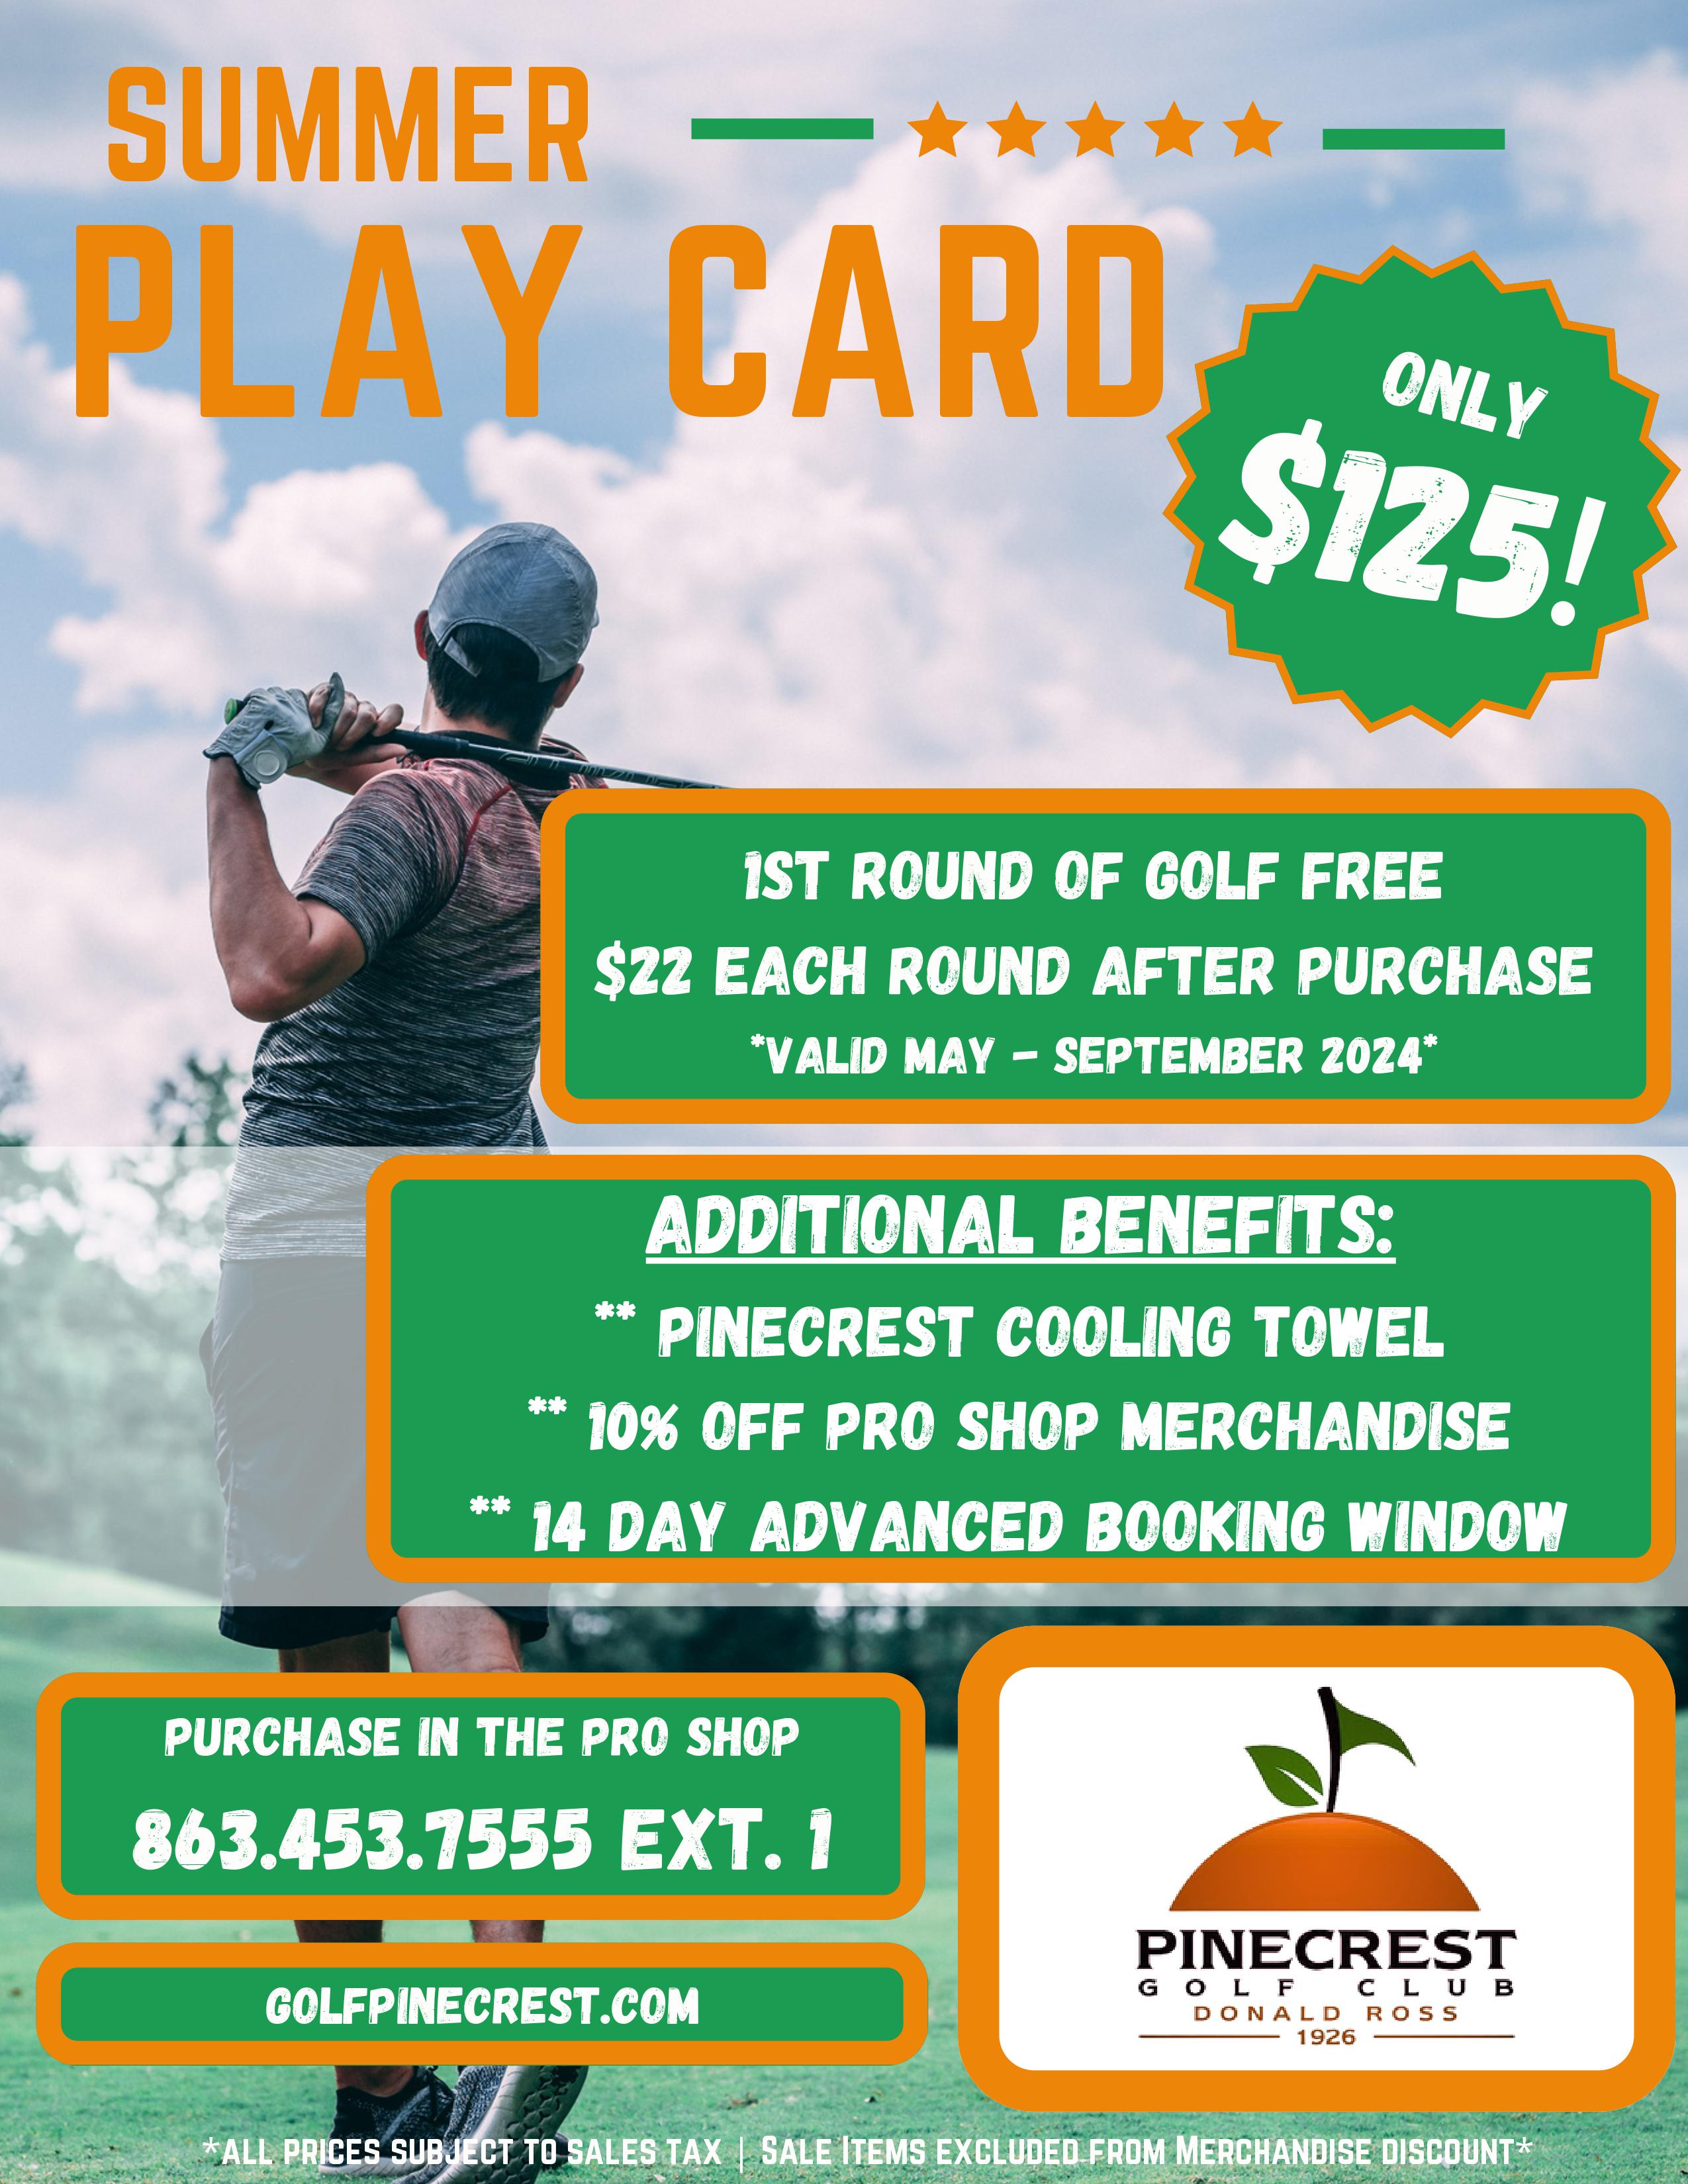 Pinecrest Golf Club | Home / EngageBox (Popup) - (October 2023) Pinecrest Golf Club Home / EngageBox (Popup) – (October 2023) PGC Winter Golf Pass (Flyer / Promo)